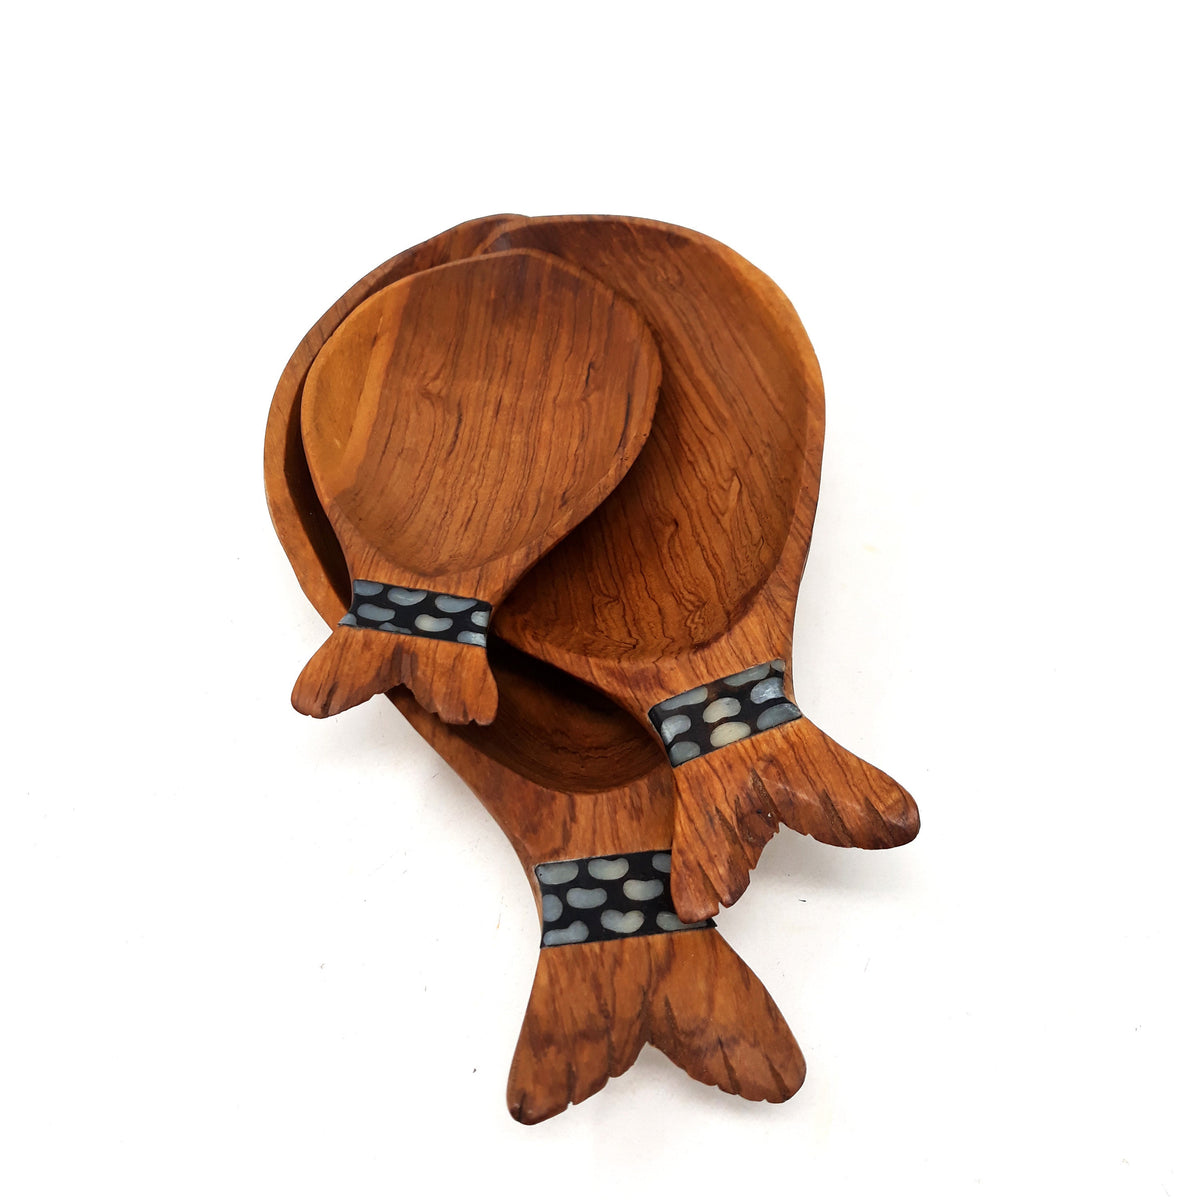 Wooden gift set, Wooden bowl set, Handmade wooden bowl, Decorative rustic bowl, Farmhouse wood bowl, wooden snack bowls, set of wood bowls,